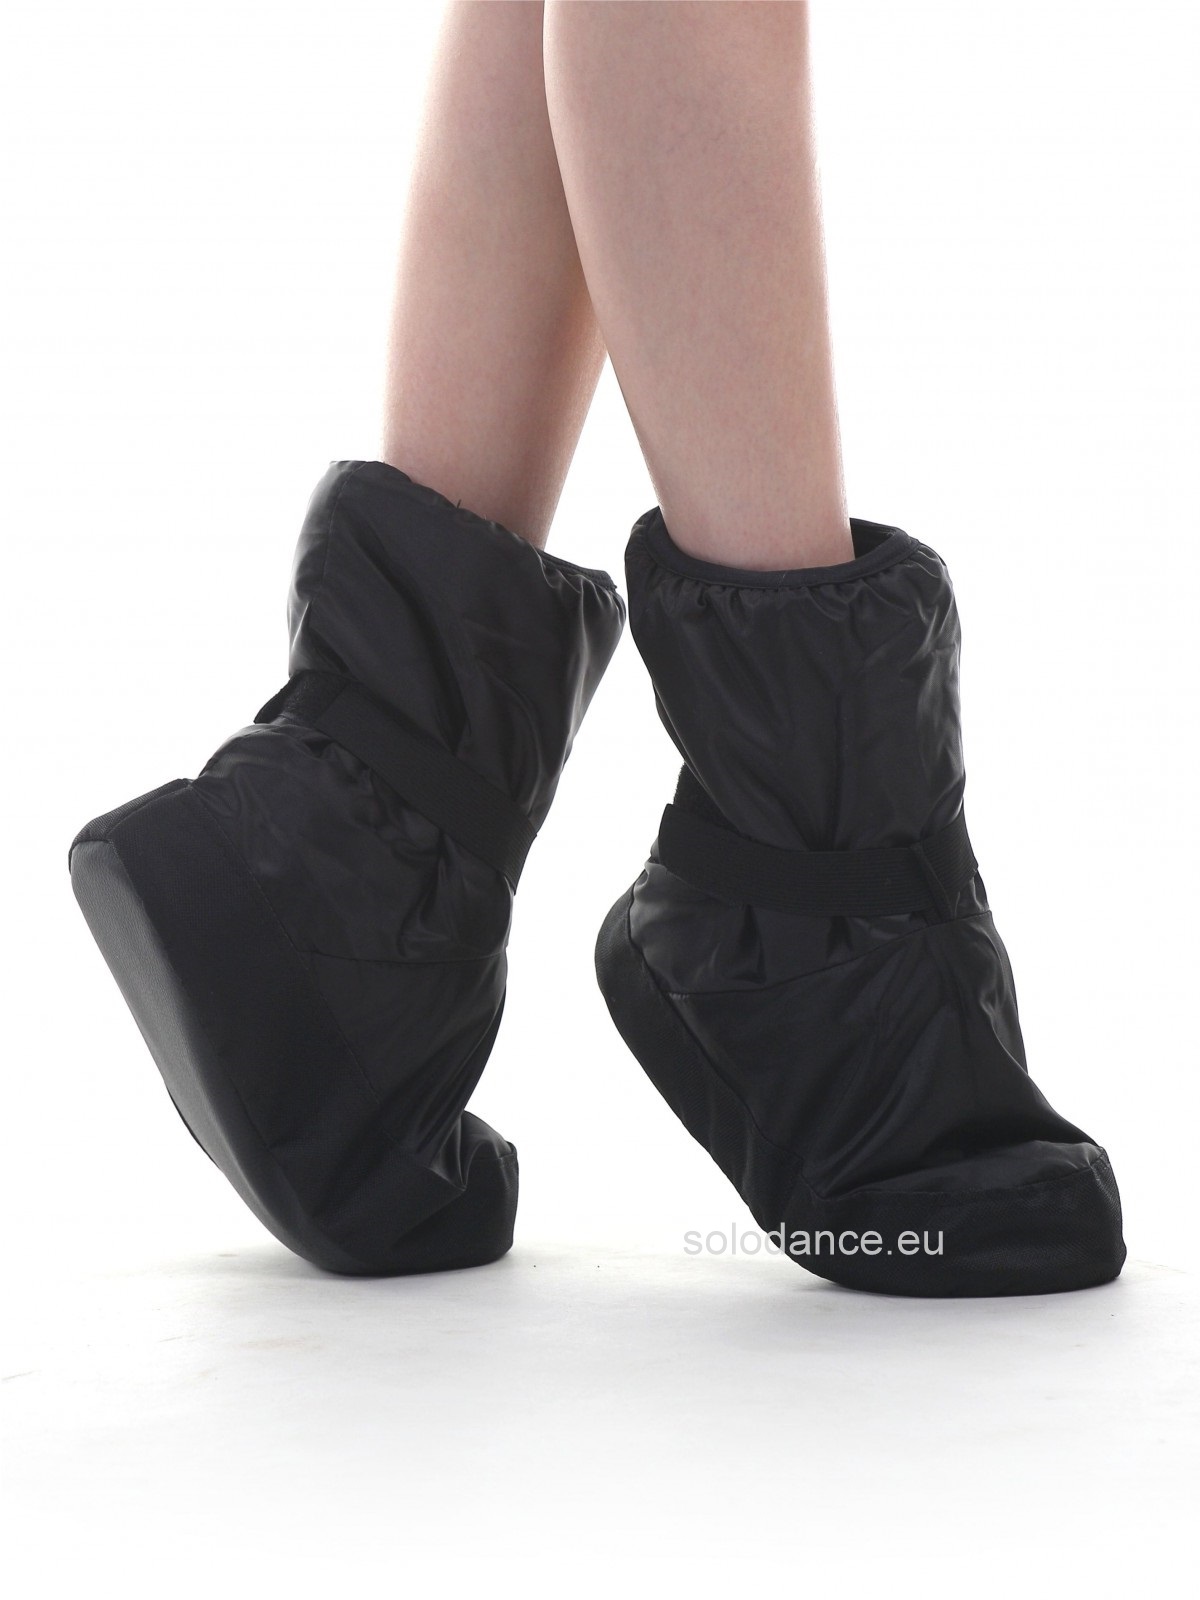 Warm-up boots BALESPO pink size 26-29